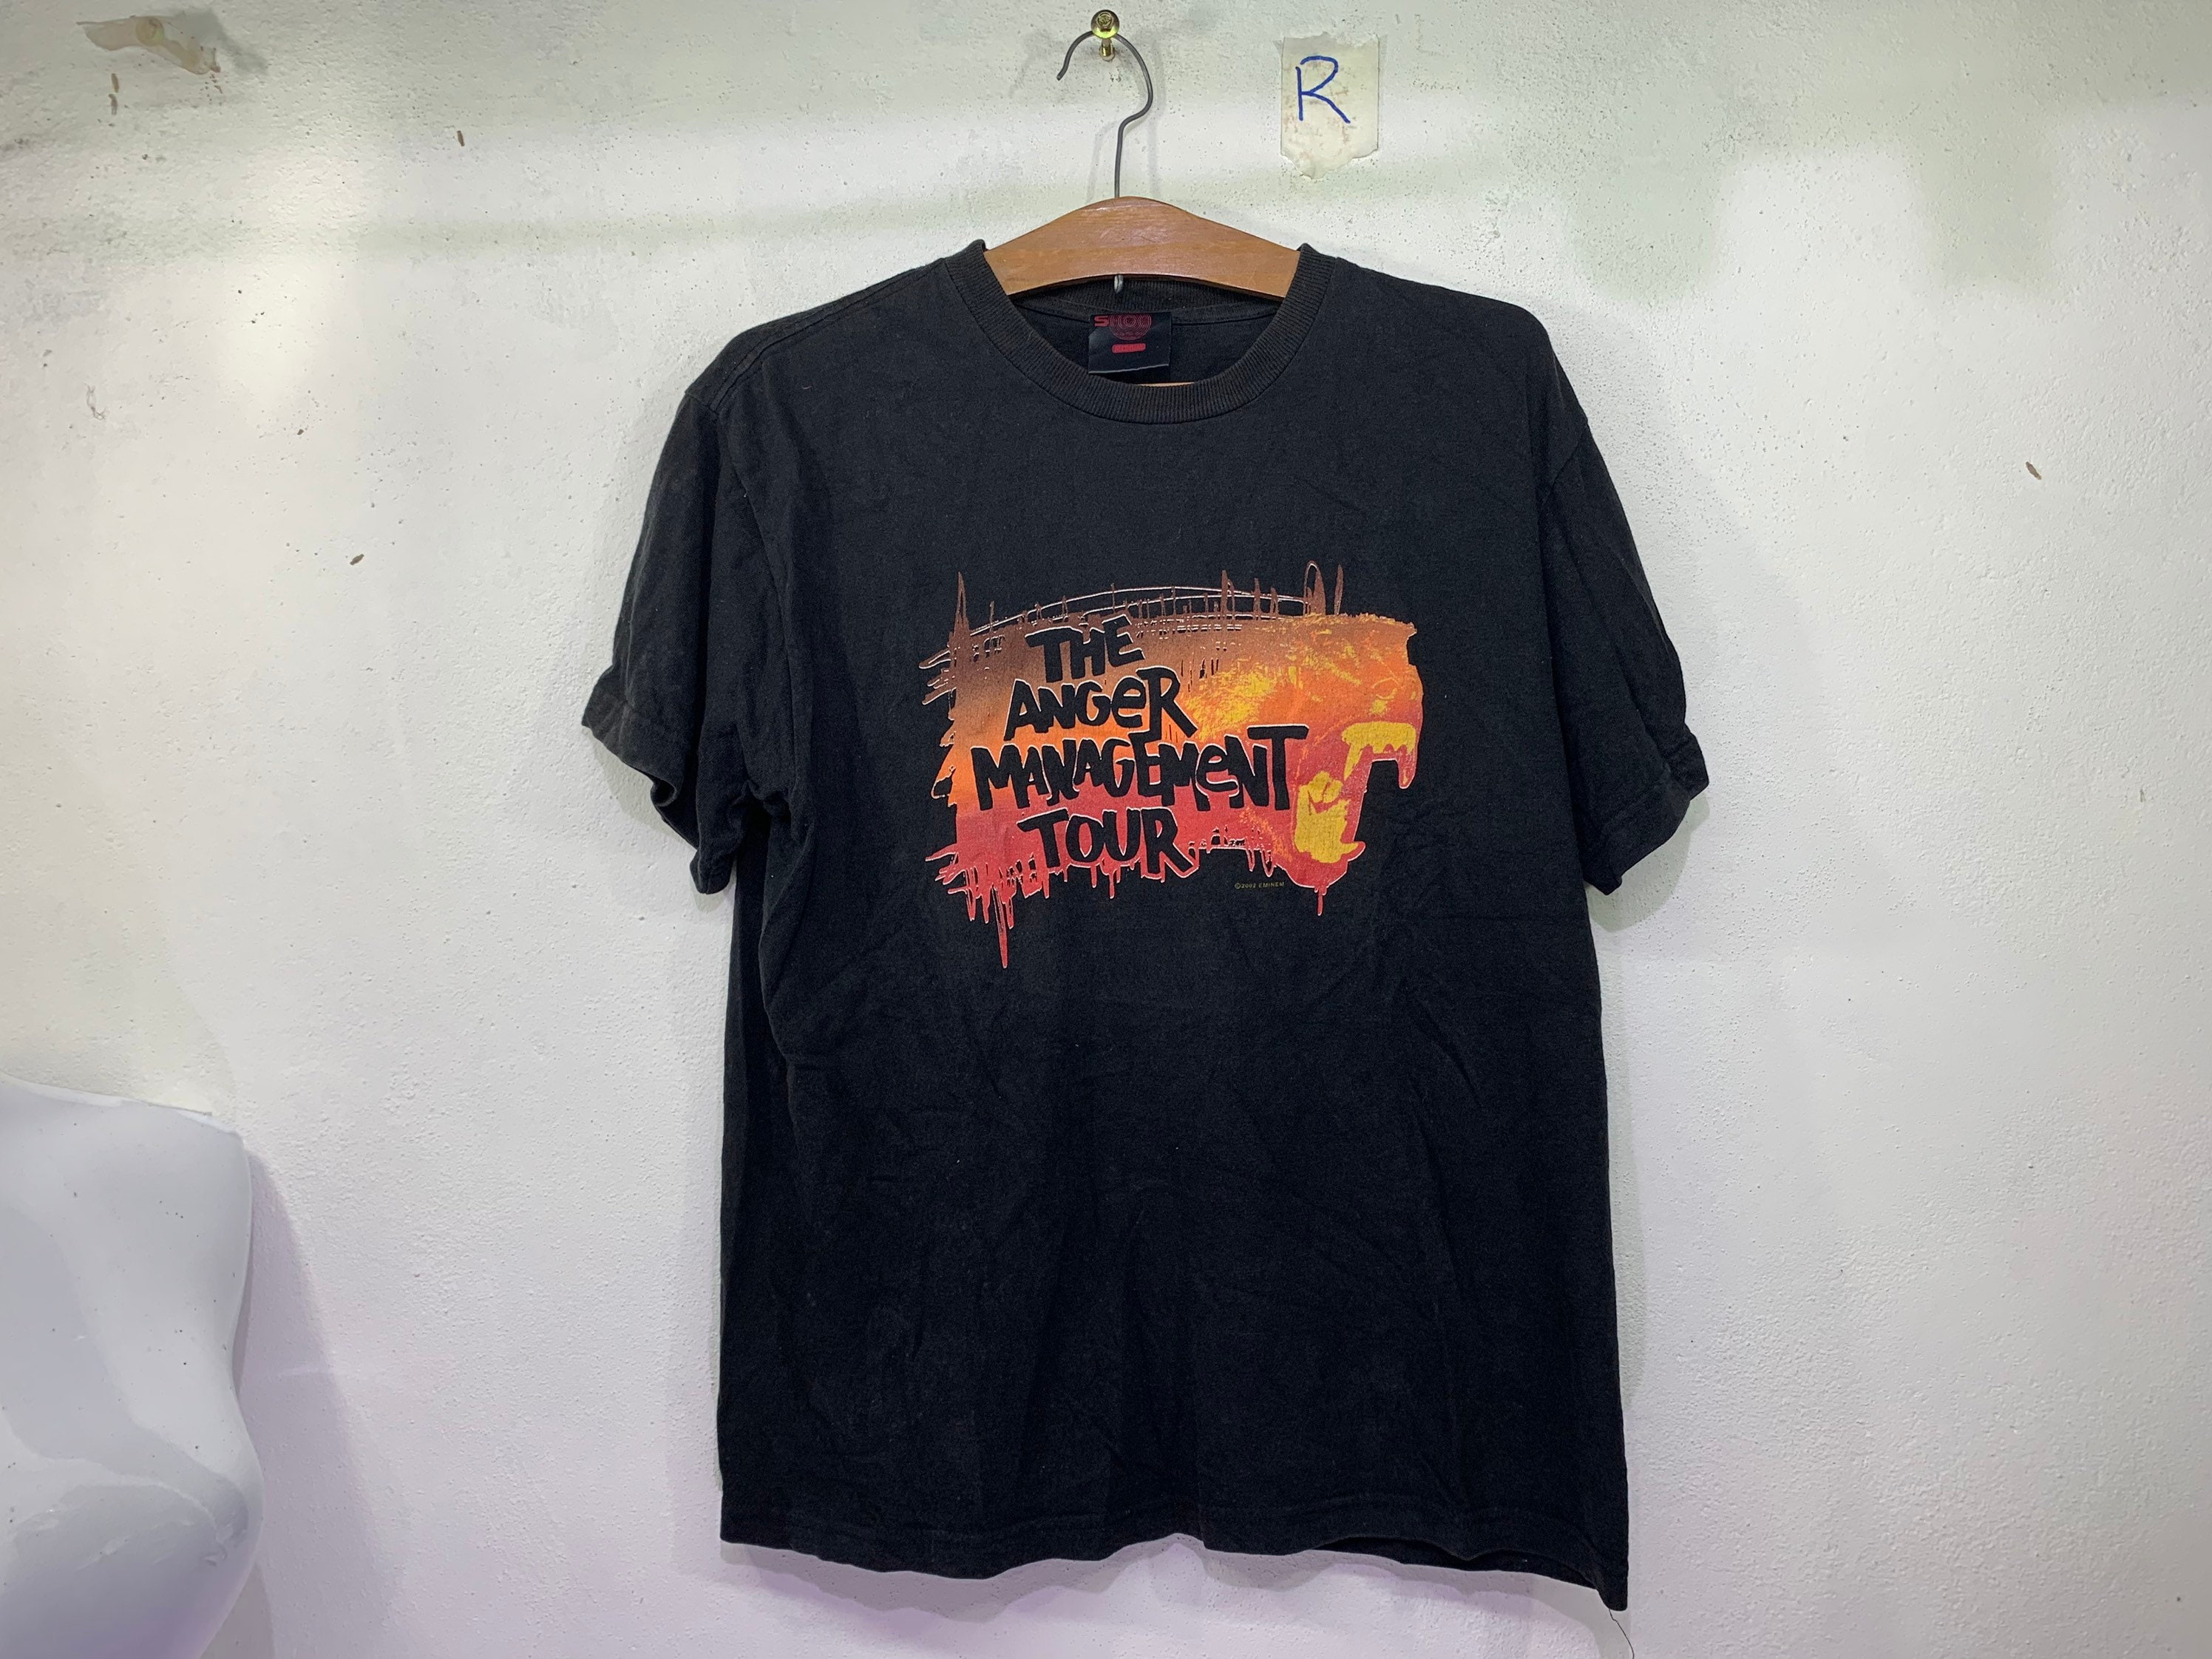 Kleding Herenkleding Overhemden & T-shirts T-shirts T-shirts met print Vintage Anger Management film promo T-shirt maat XL 